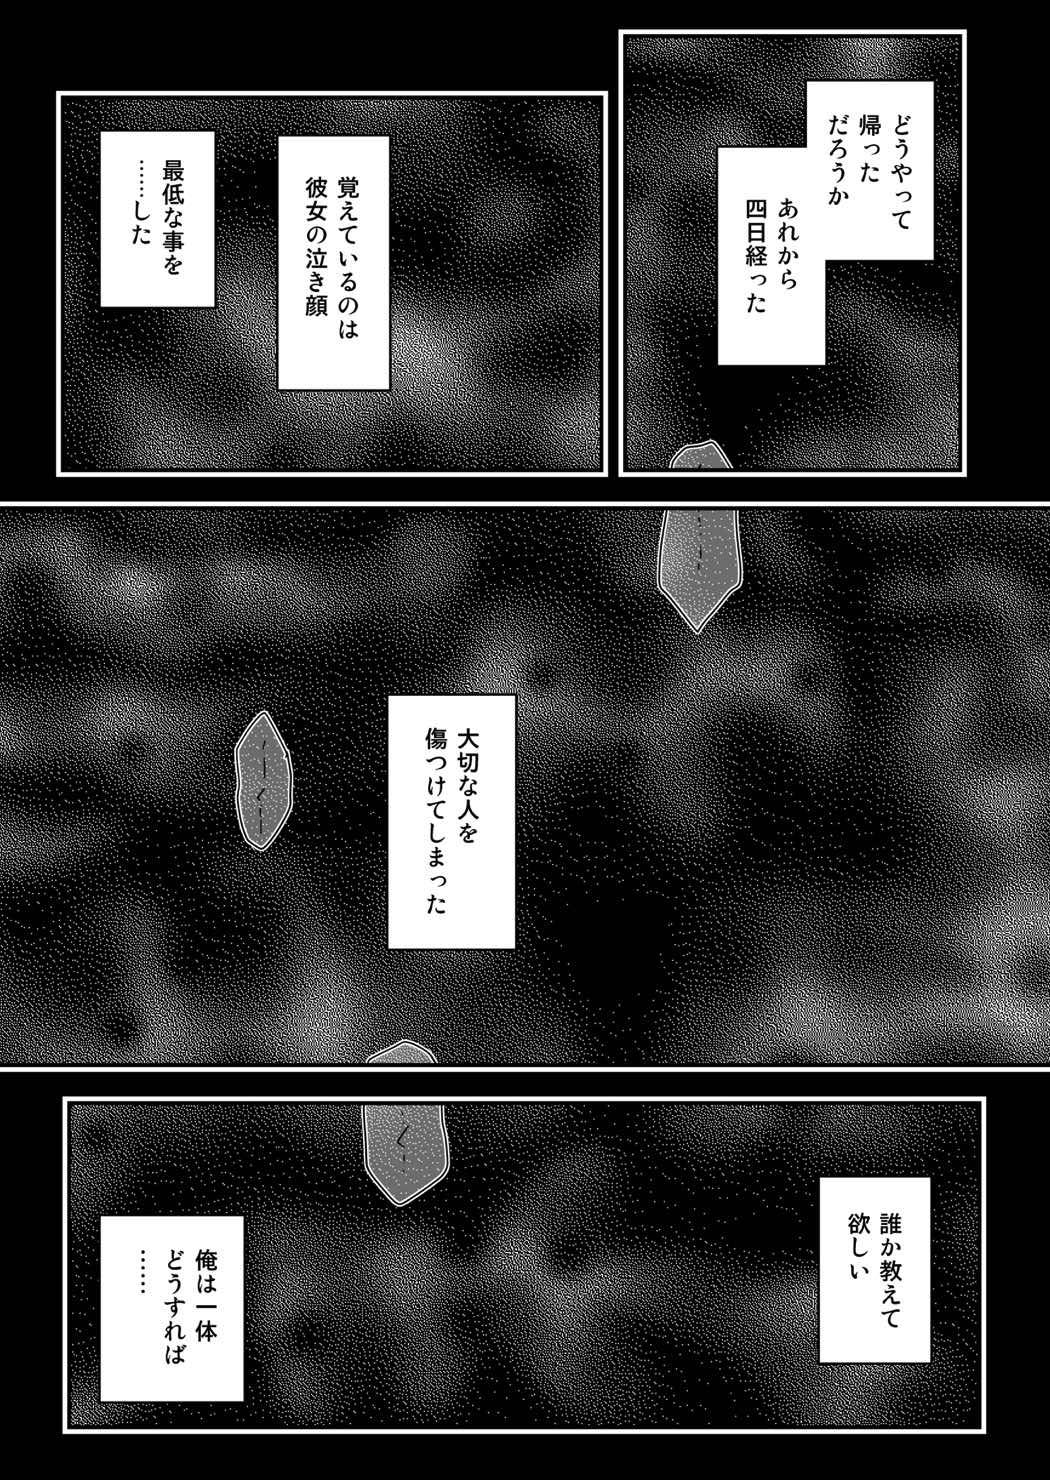 Art ＊＊＊＊＊＊＊＊＊! 2 - Seitokai yakuindomo Storyline - Picture 2